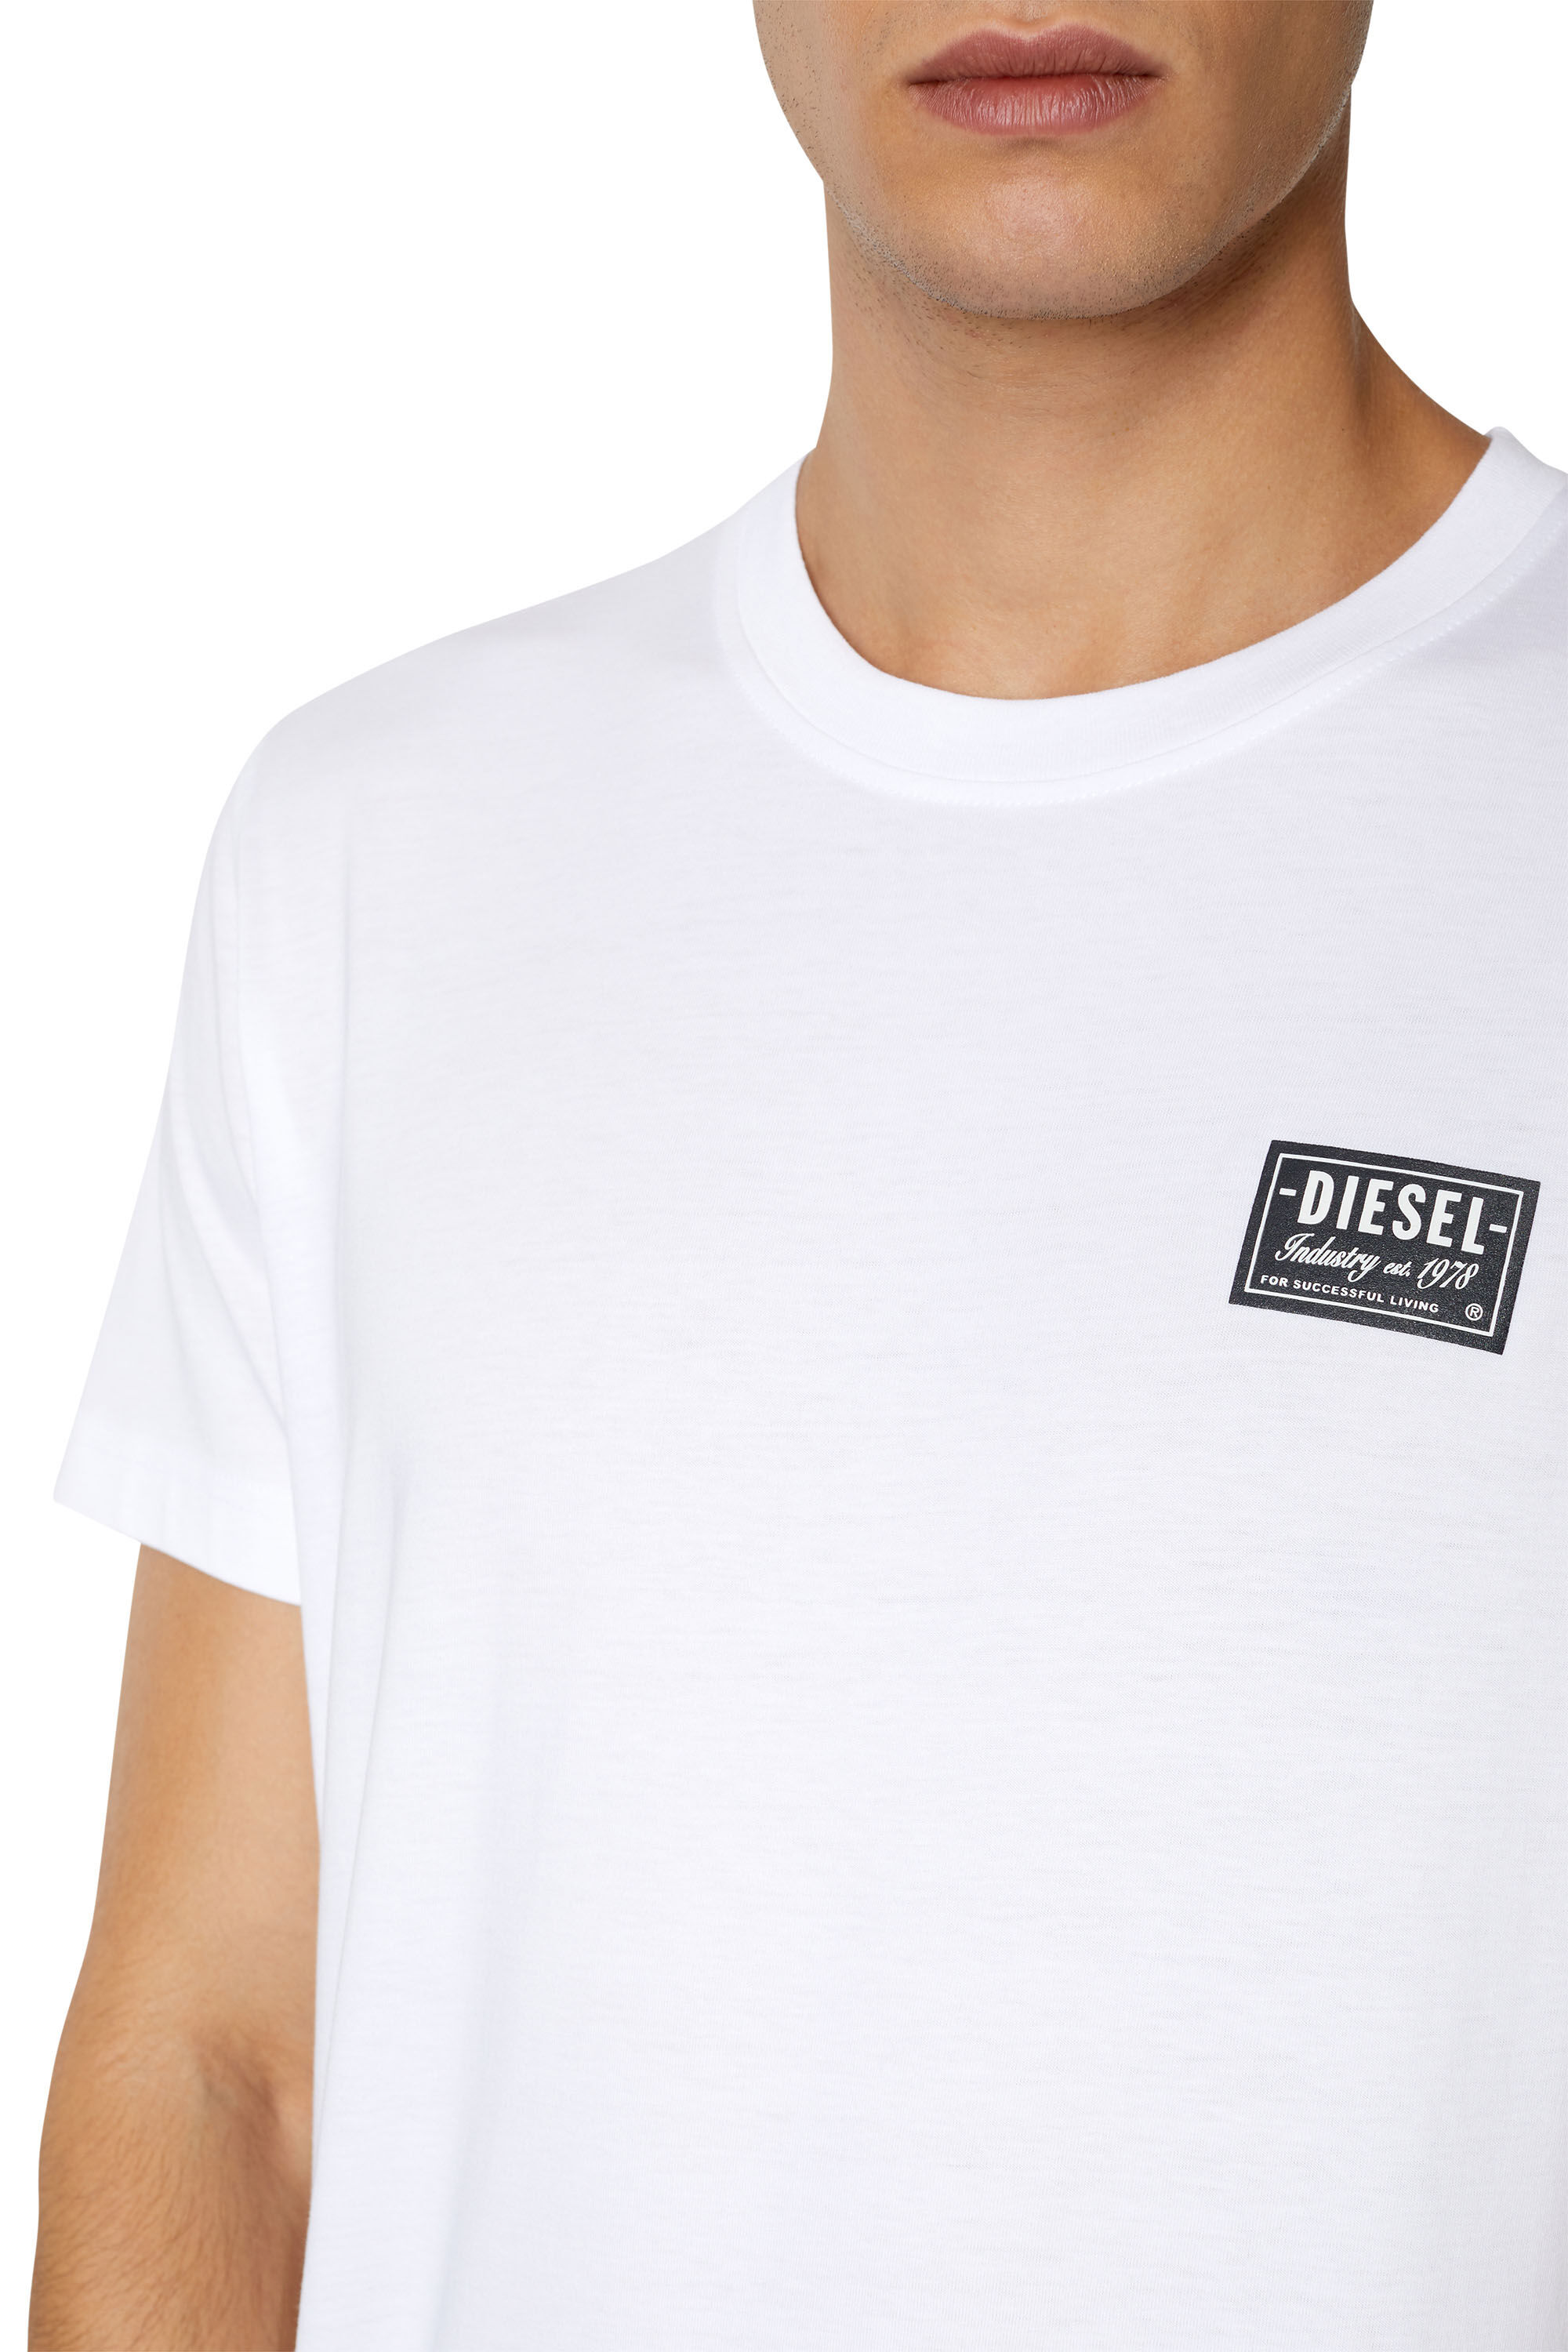 diesel　ワンポイント　Tシャツ　Diegor